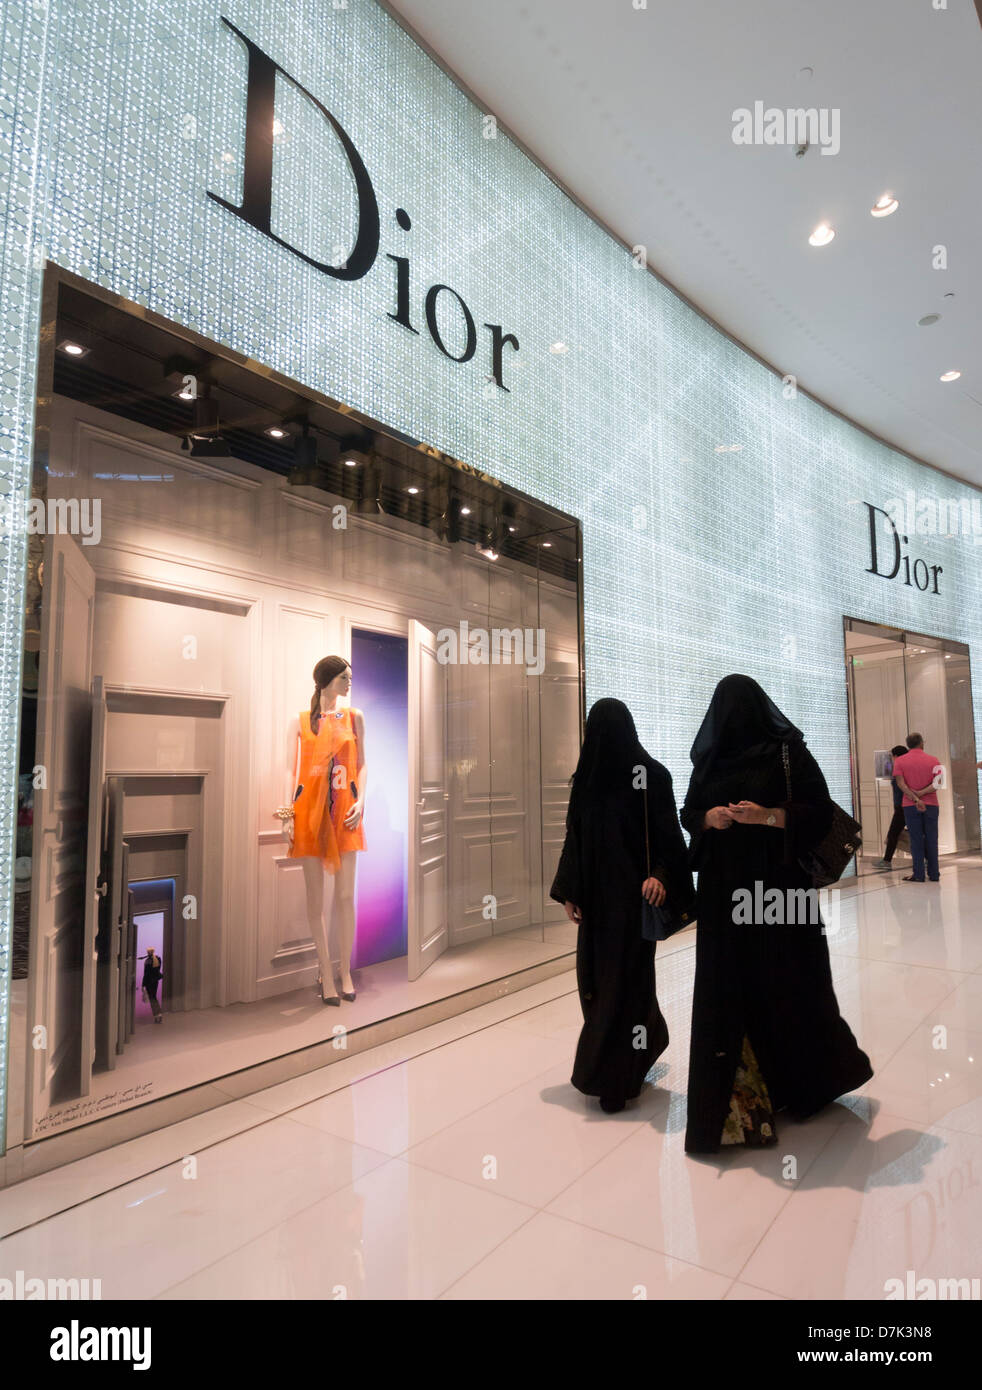 Dior boutique and shoppers at The Dubai Mall in Dubai United Arab Emirates Stock Photo